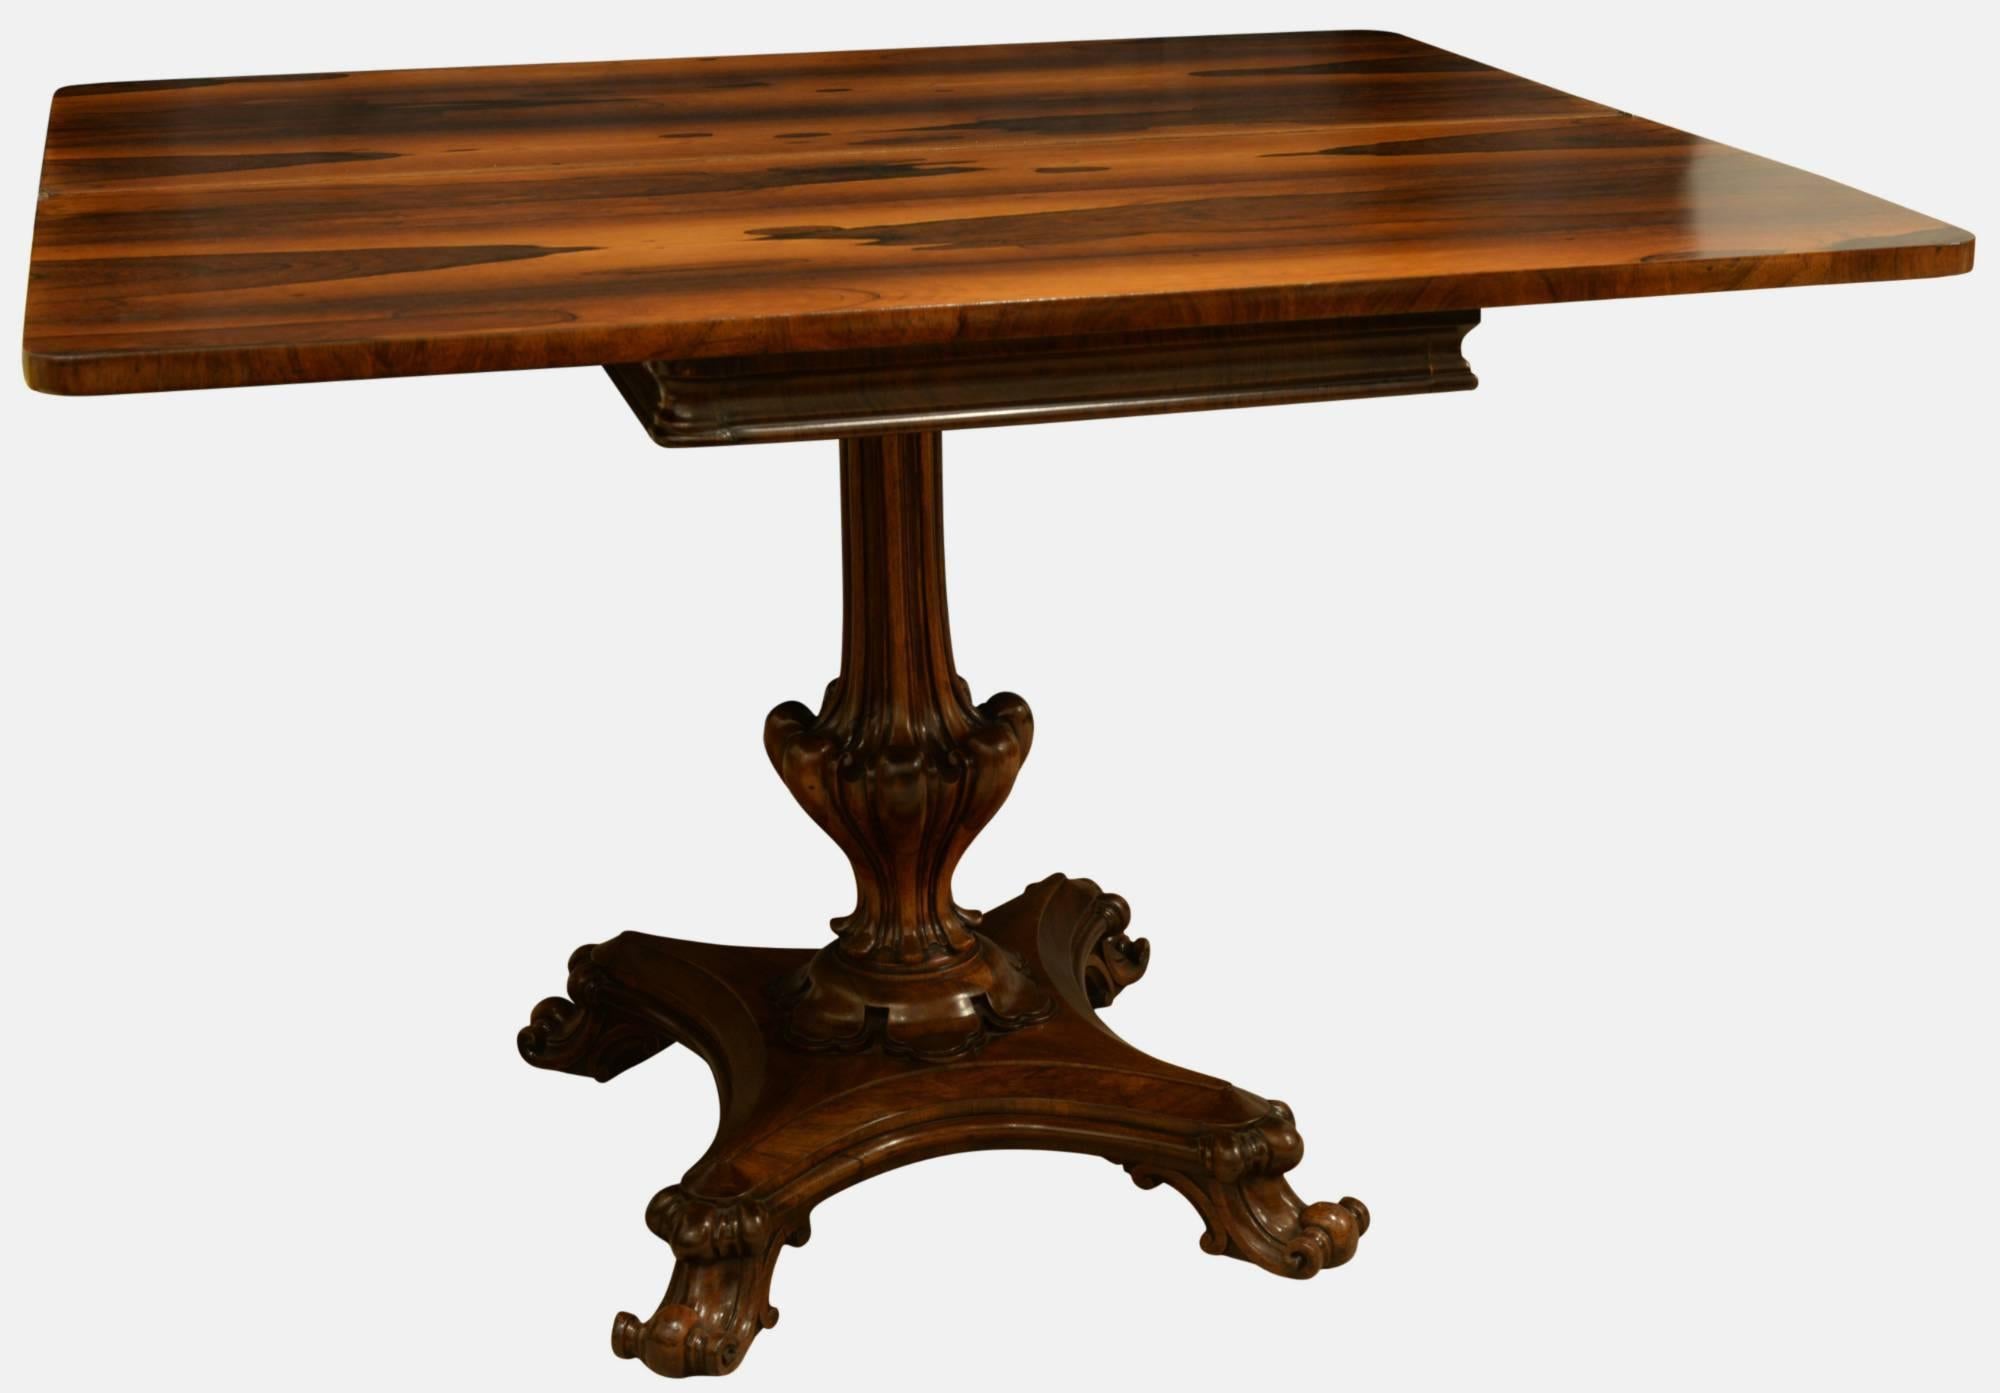 A beautifully figured Regency rosewood tea table,

circa 1830.